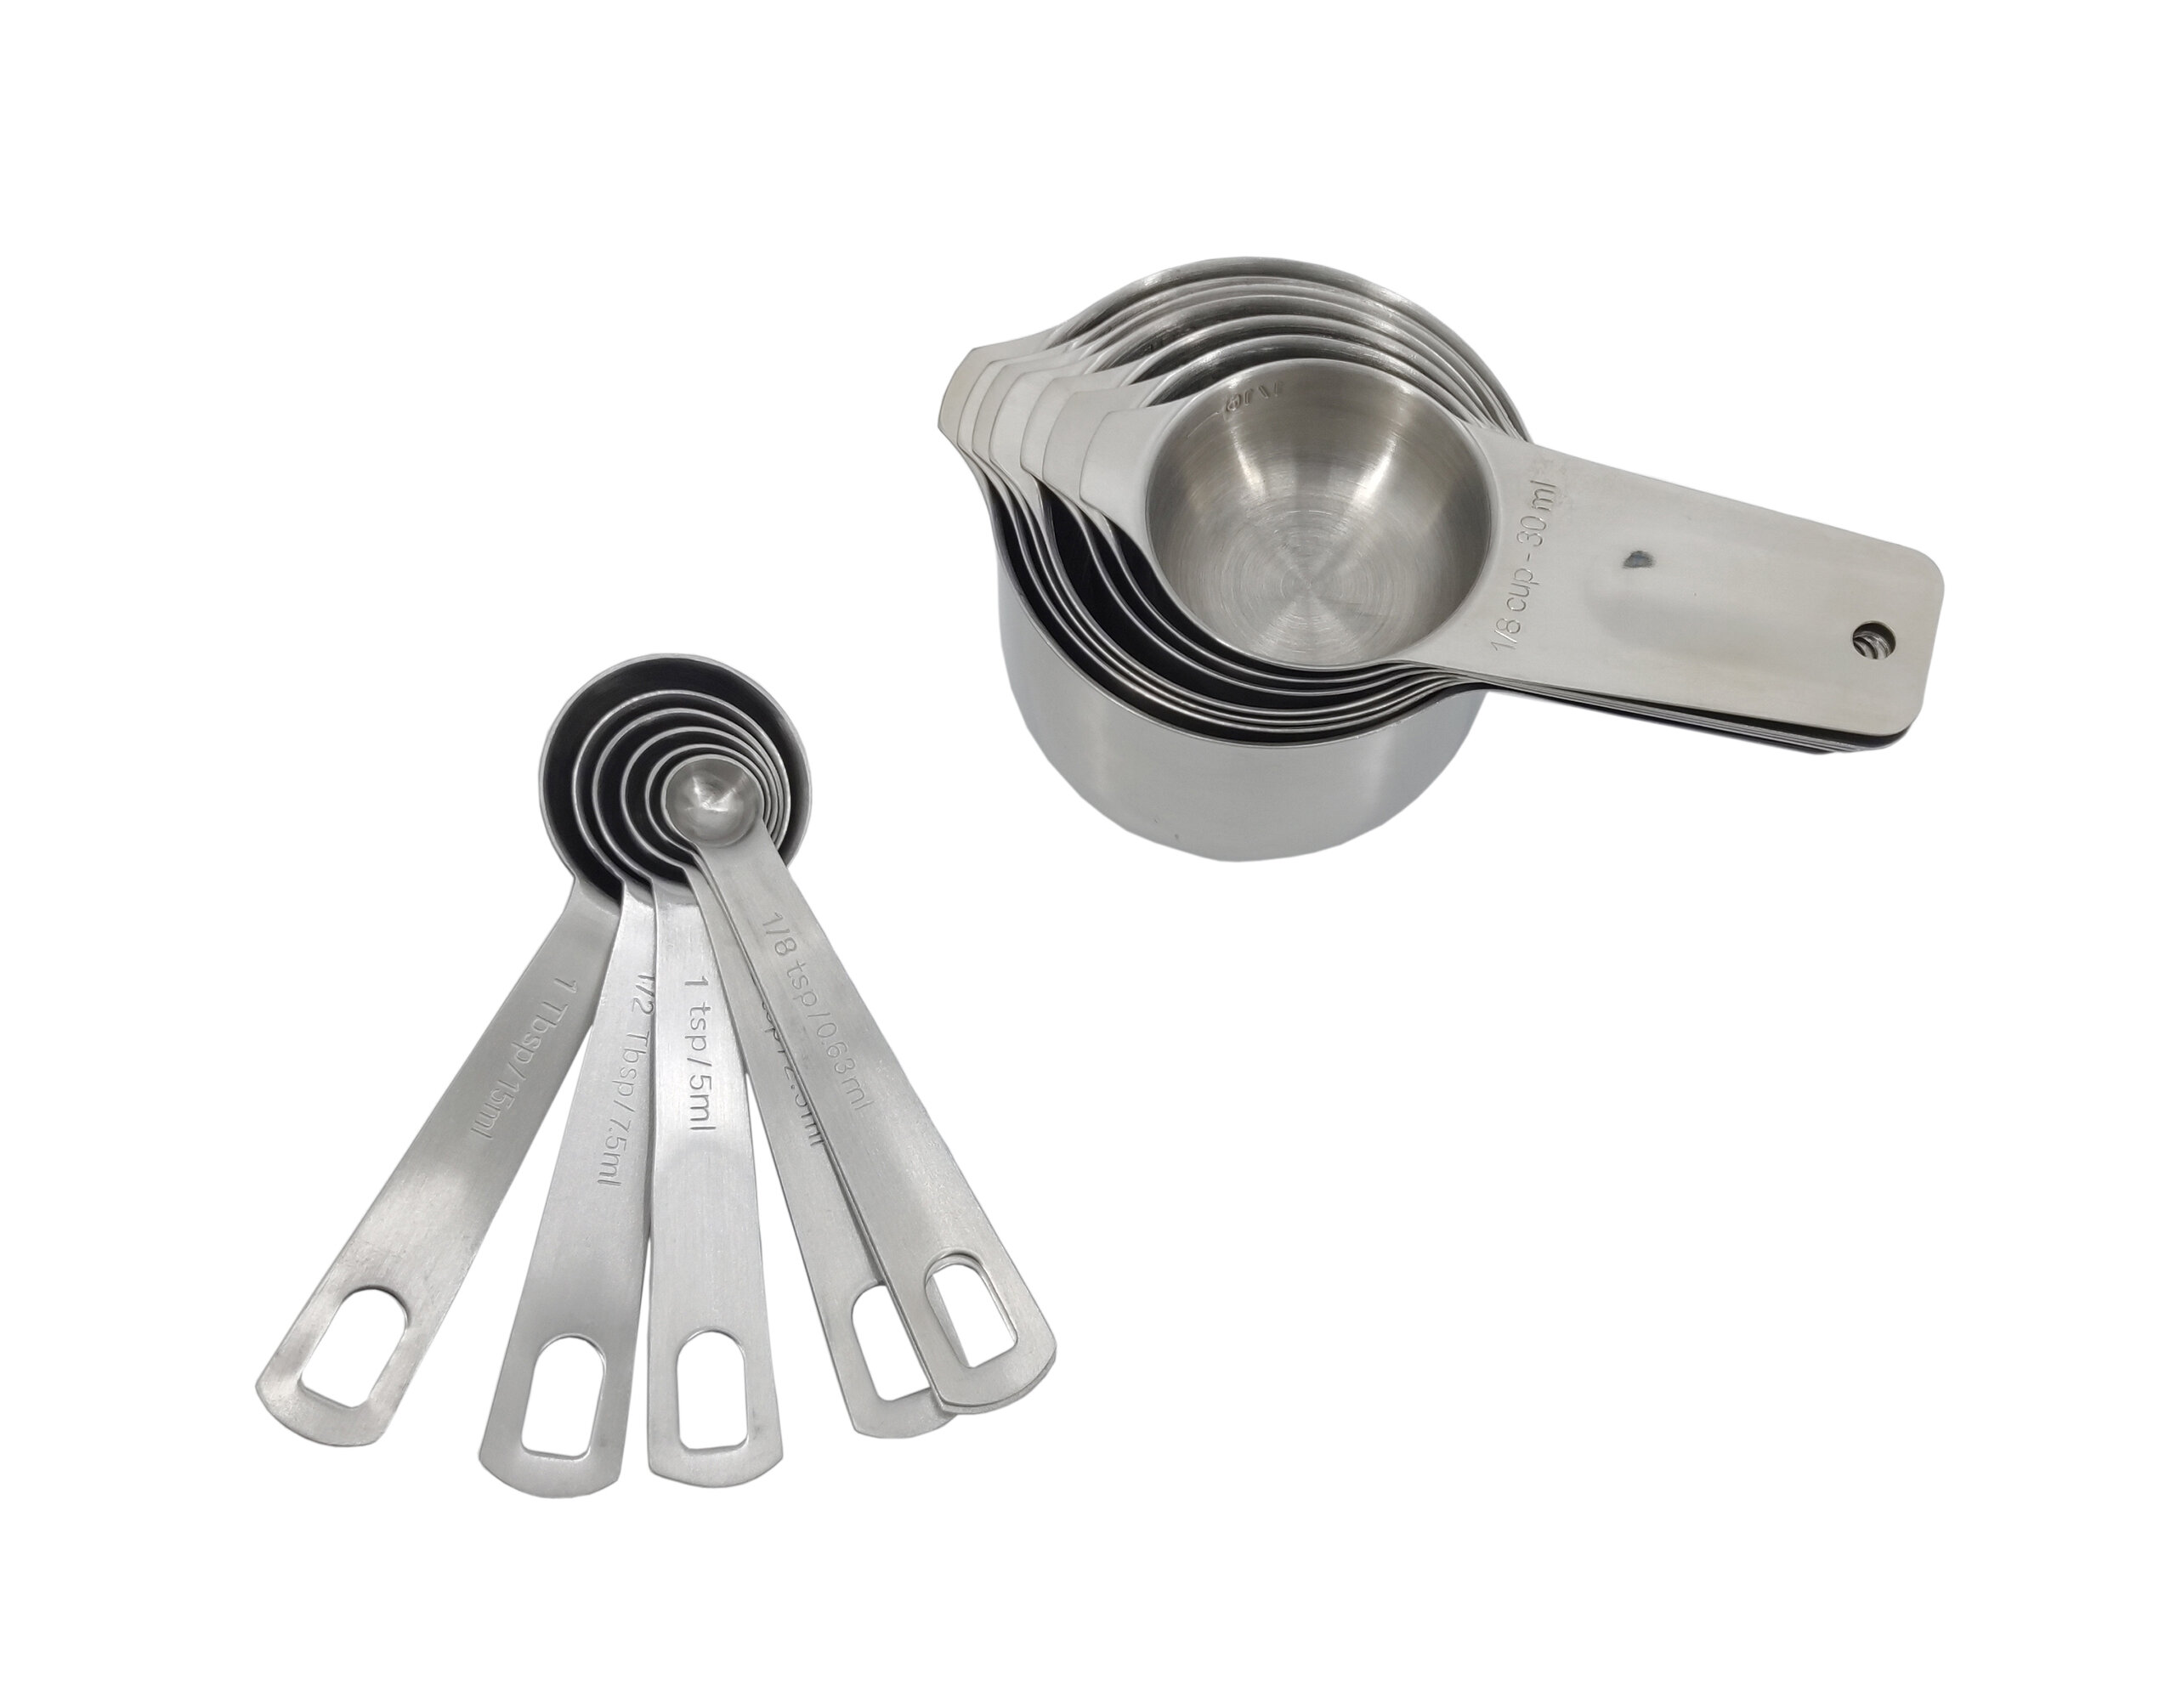 Kitchenaid Universal Measuring Spoons Set Of 5, Mixing & Measuring, Household